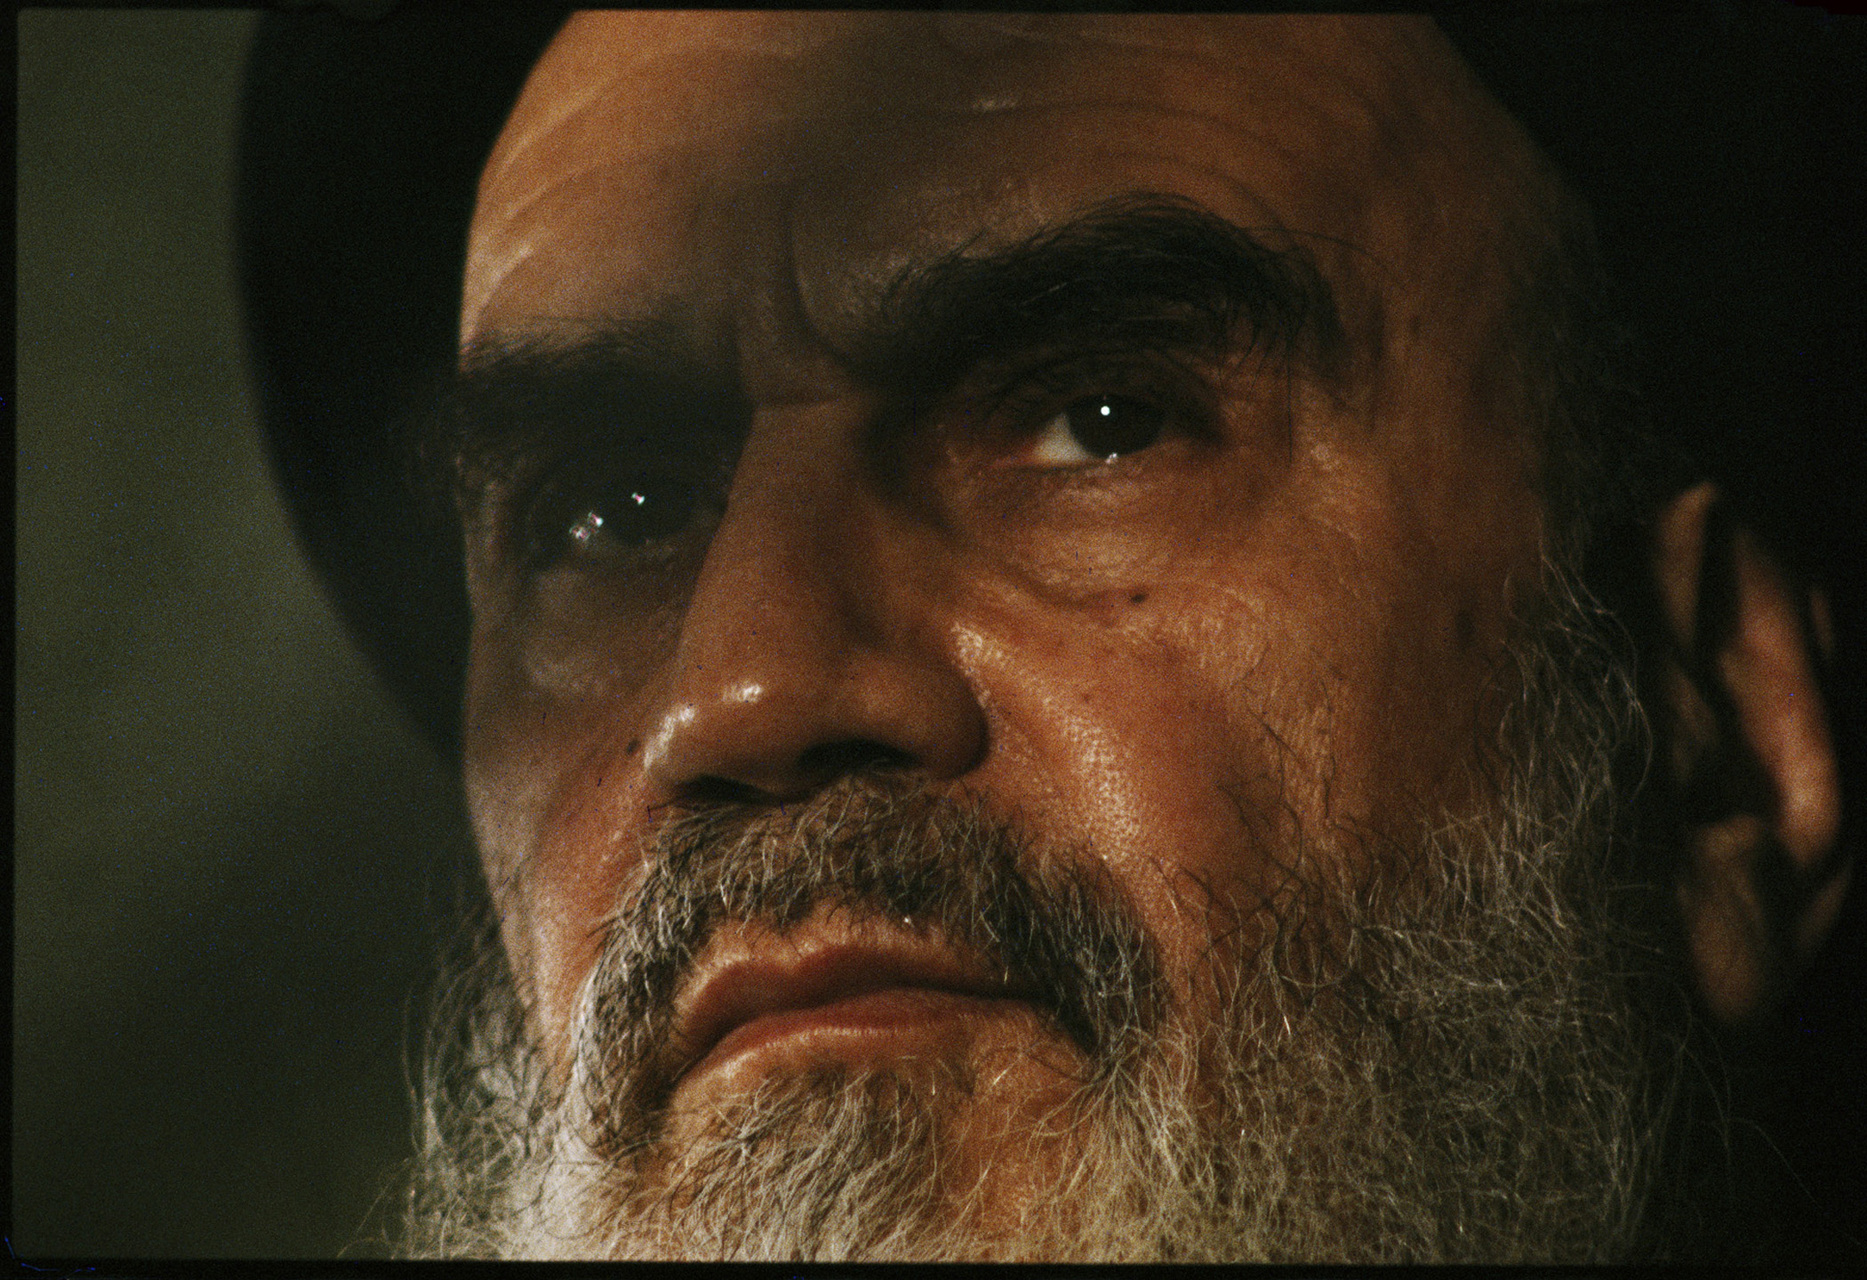 Ayatollah Khomeini. : 44 Days: the Iranian Revolution : David Burnett | Photographer